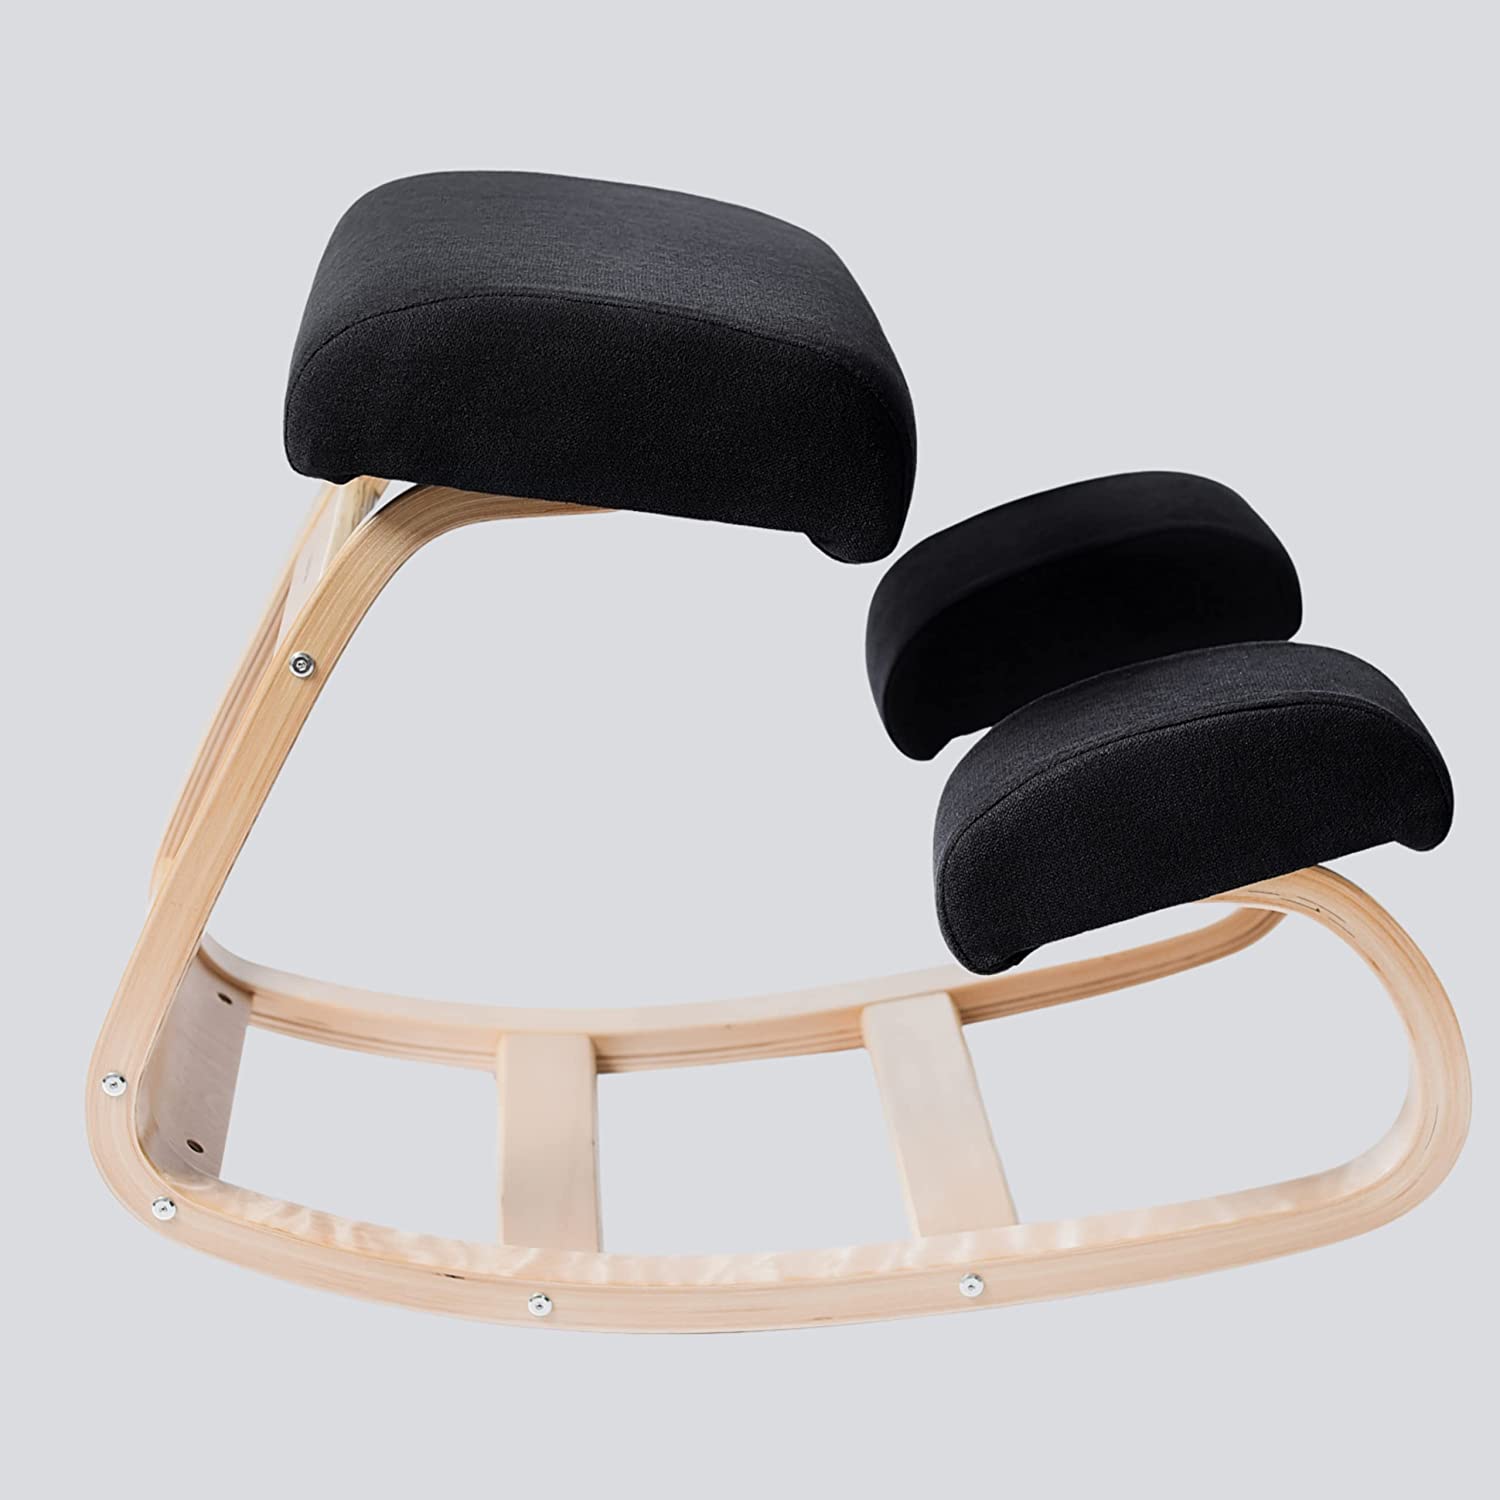 Sleekform Austin Kneeling Chair